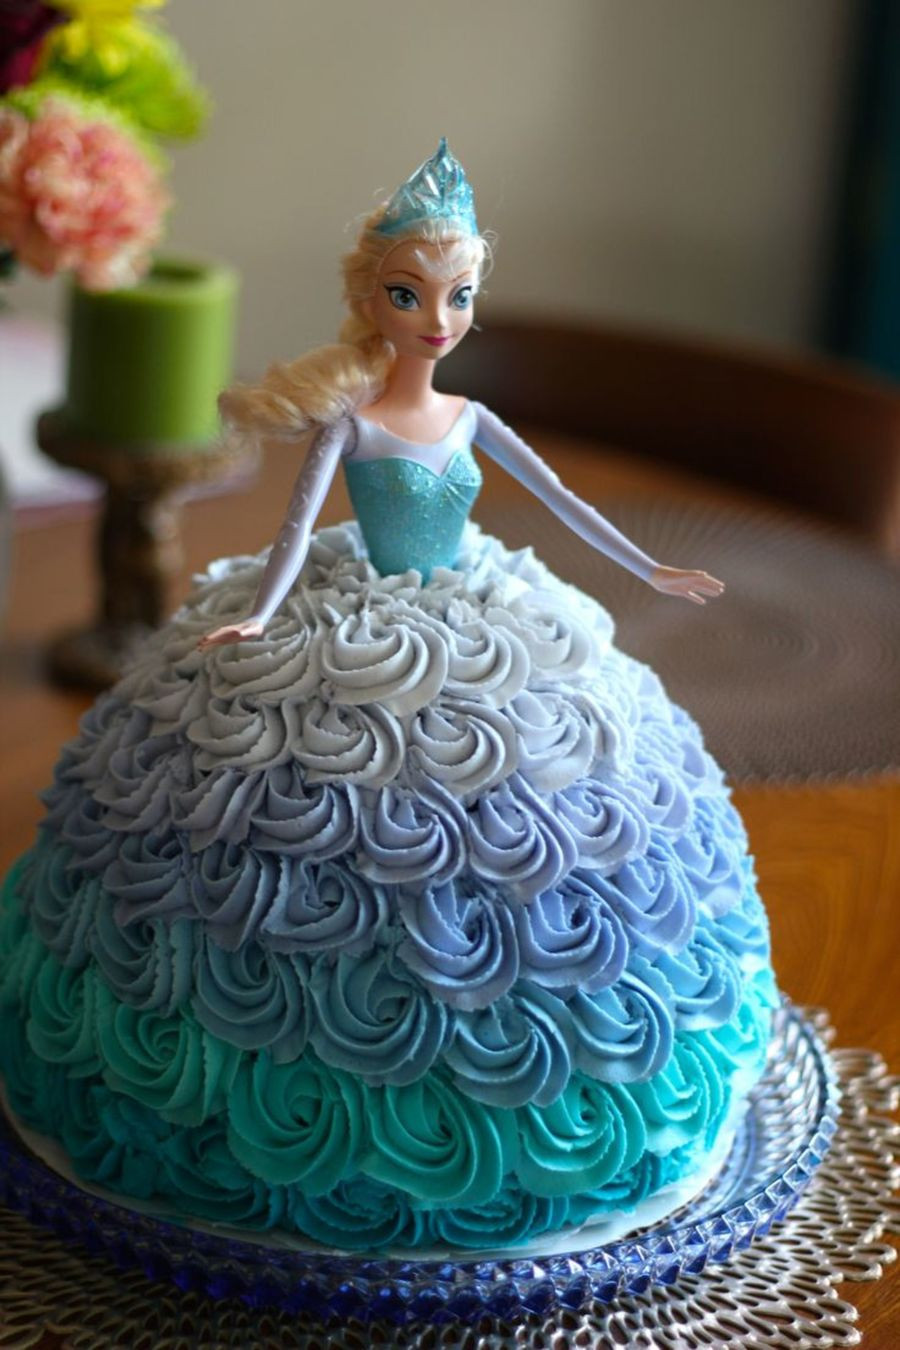 Frozen Themed Birthday Cakes
 Elsa Doll Cake For A Frozen Themed Birthday Party